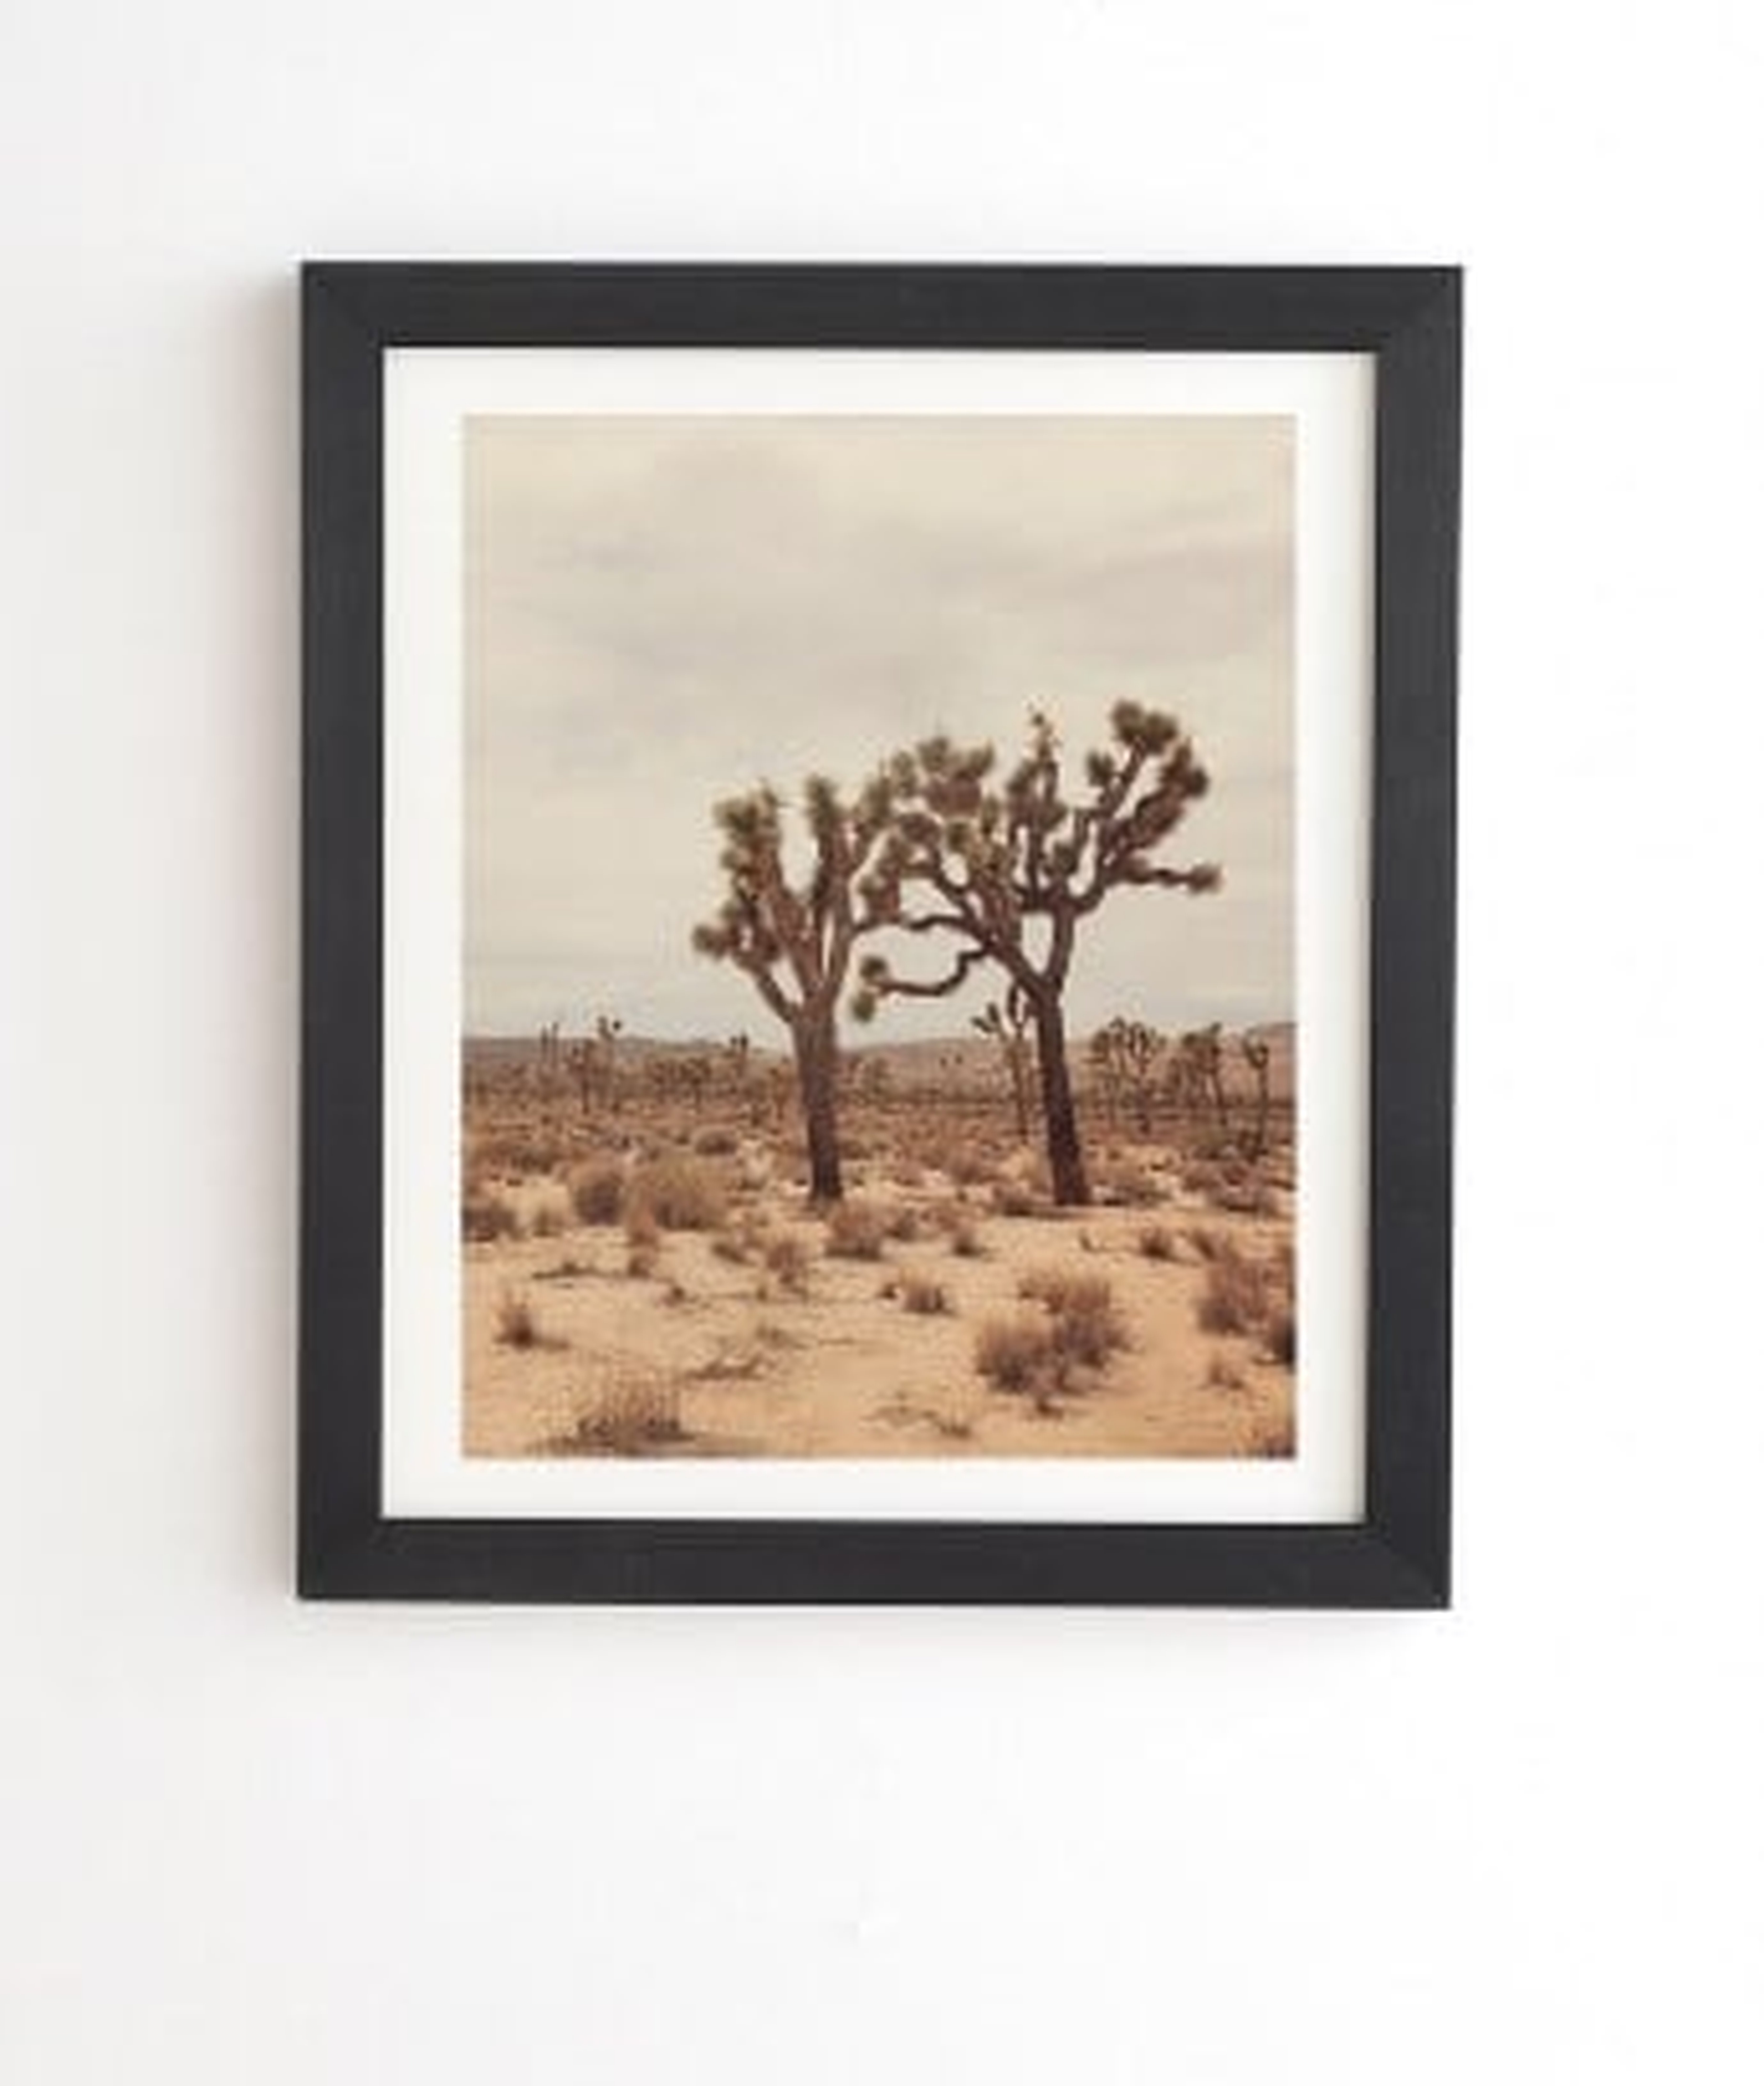 CALIFORNIA JOSHUA TREES Framed Wall Art - 19" x 22.4", Basic Black Frame - Wander Print Co.